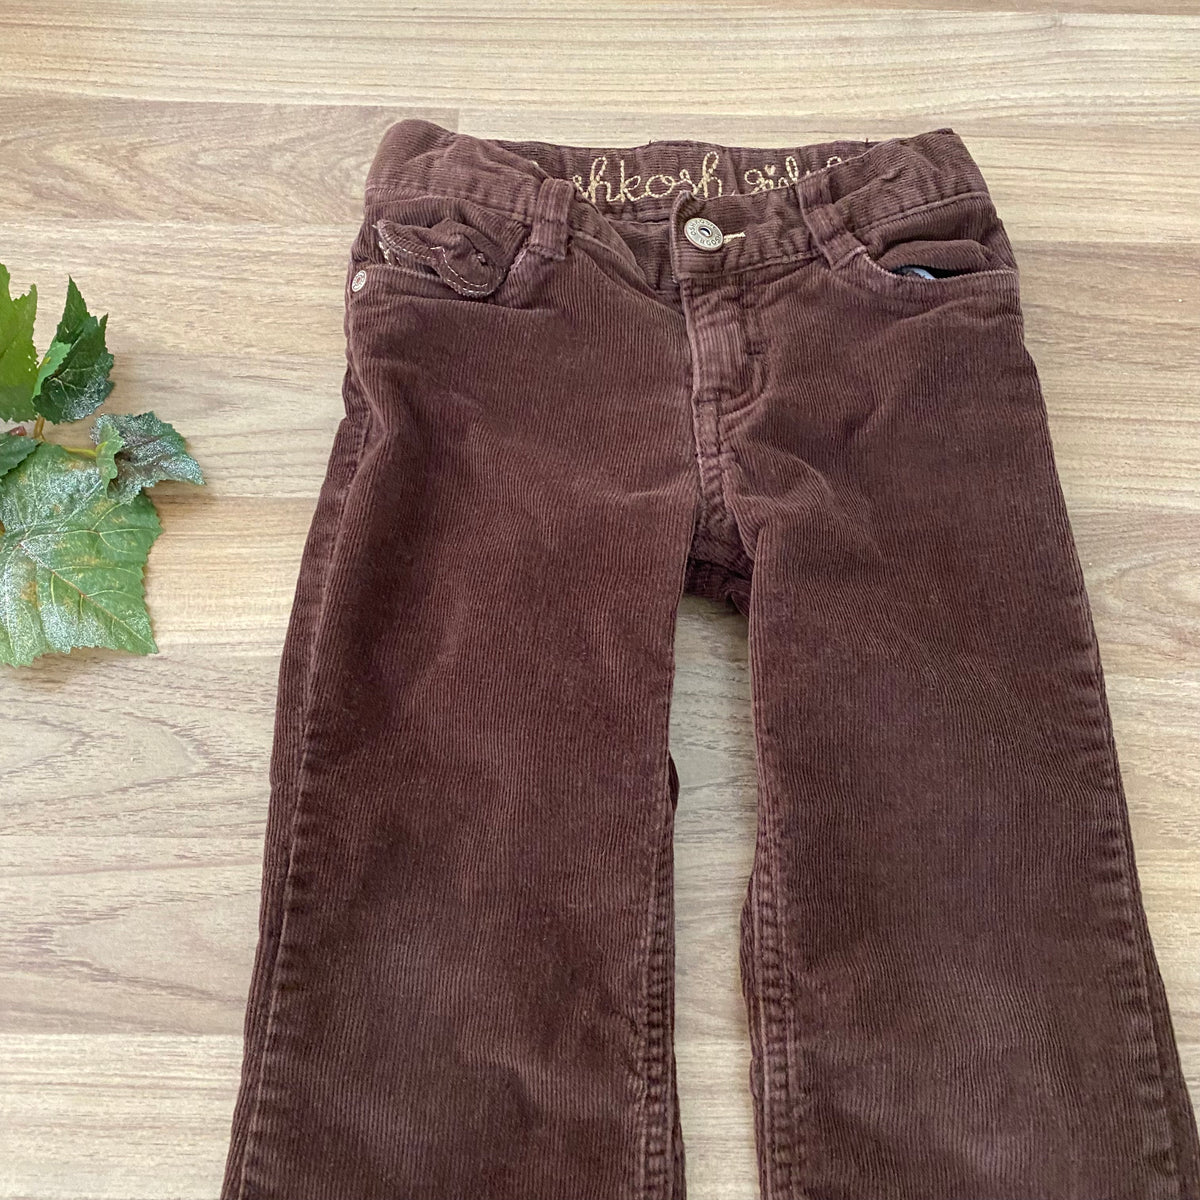 Corduroy Pants (Girls Size 4)